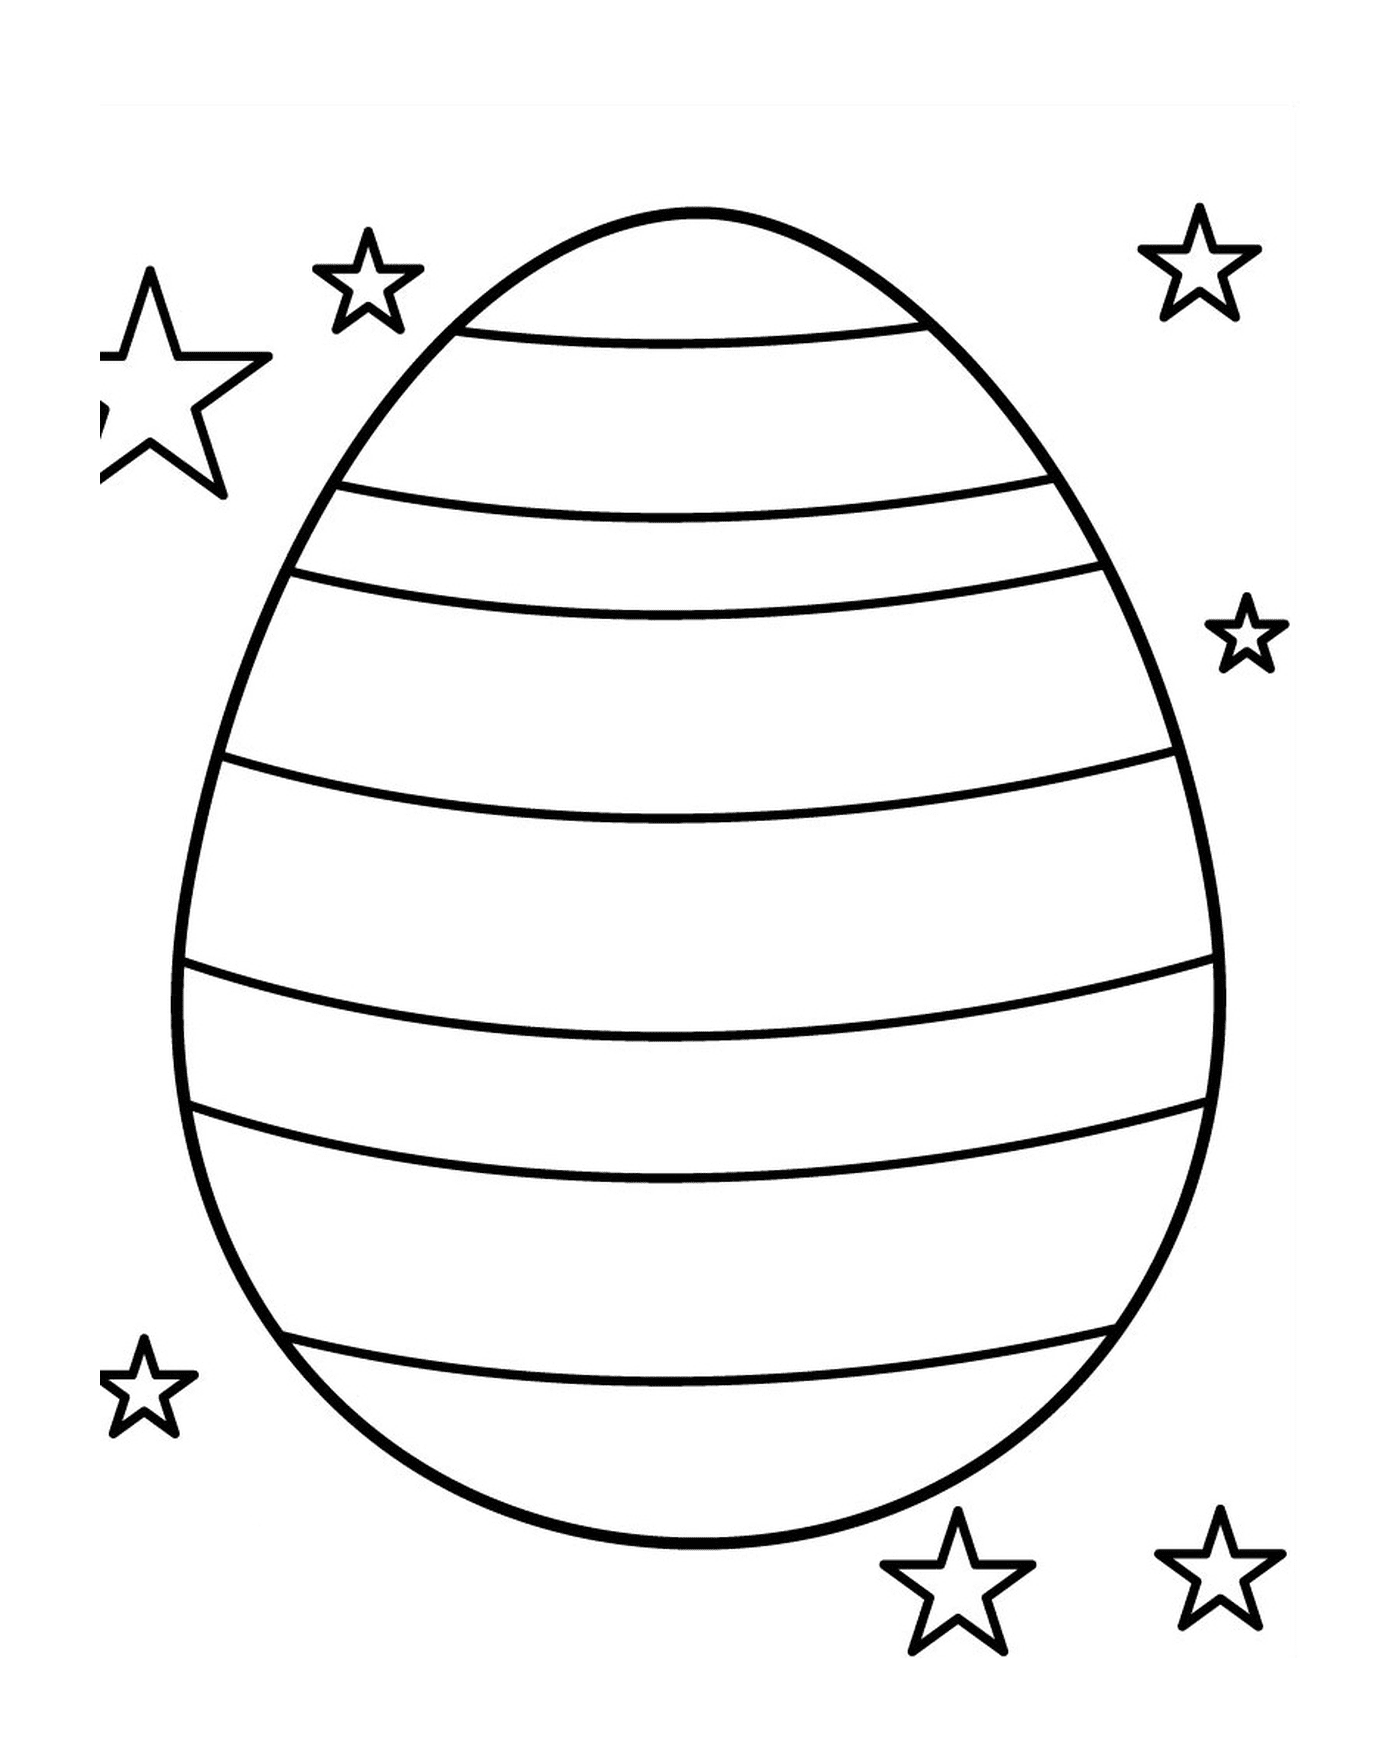  A Starred Easter Egg 